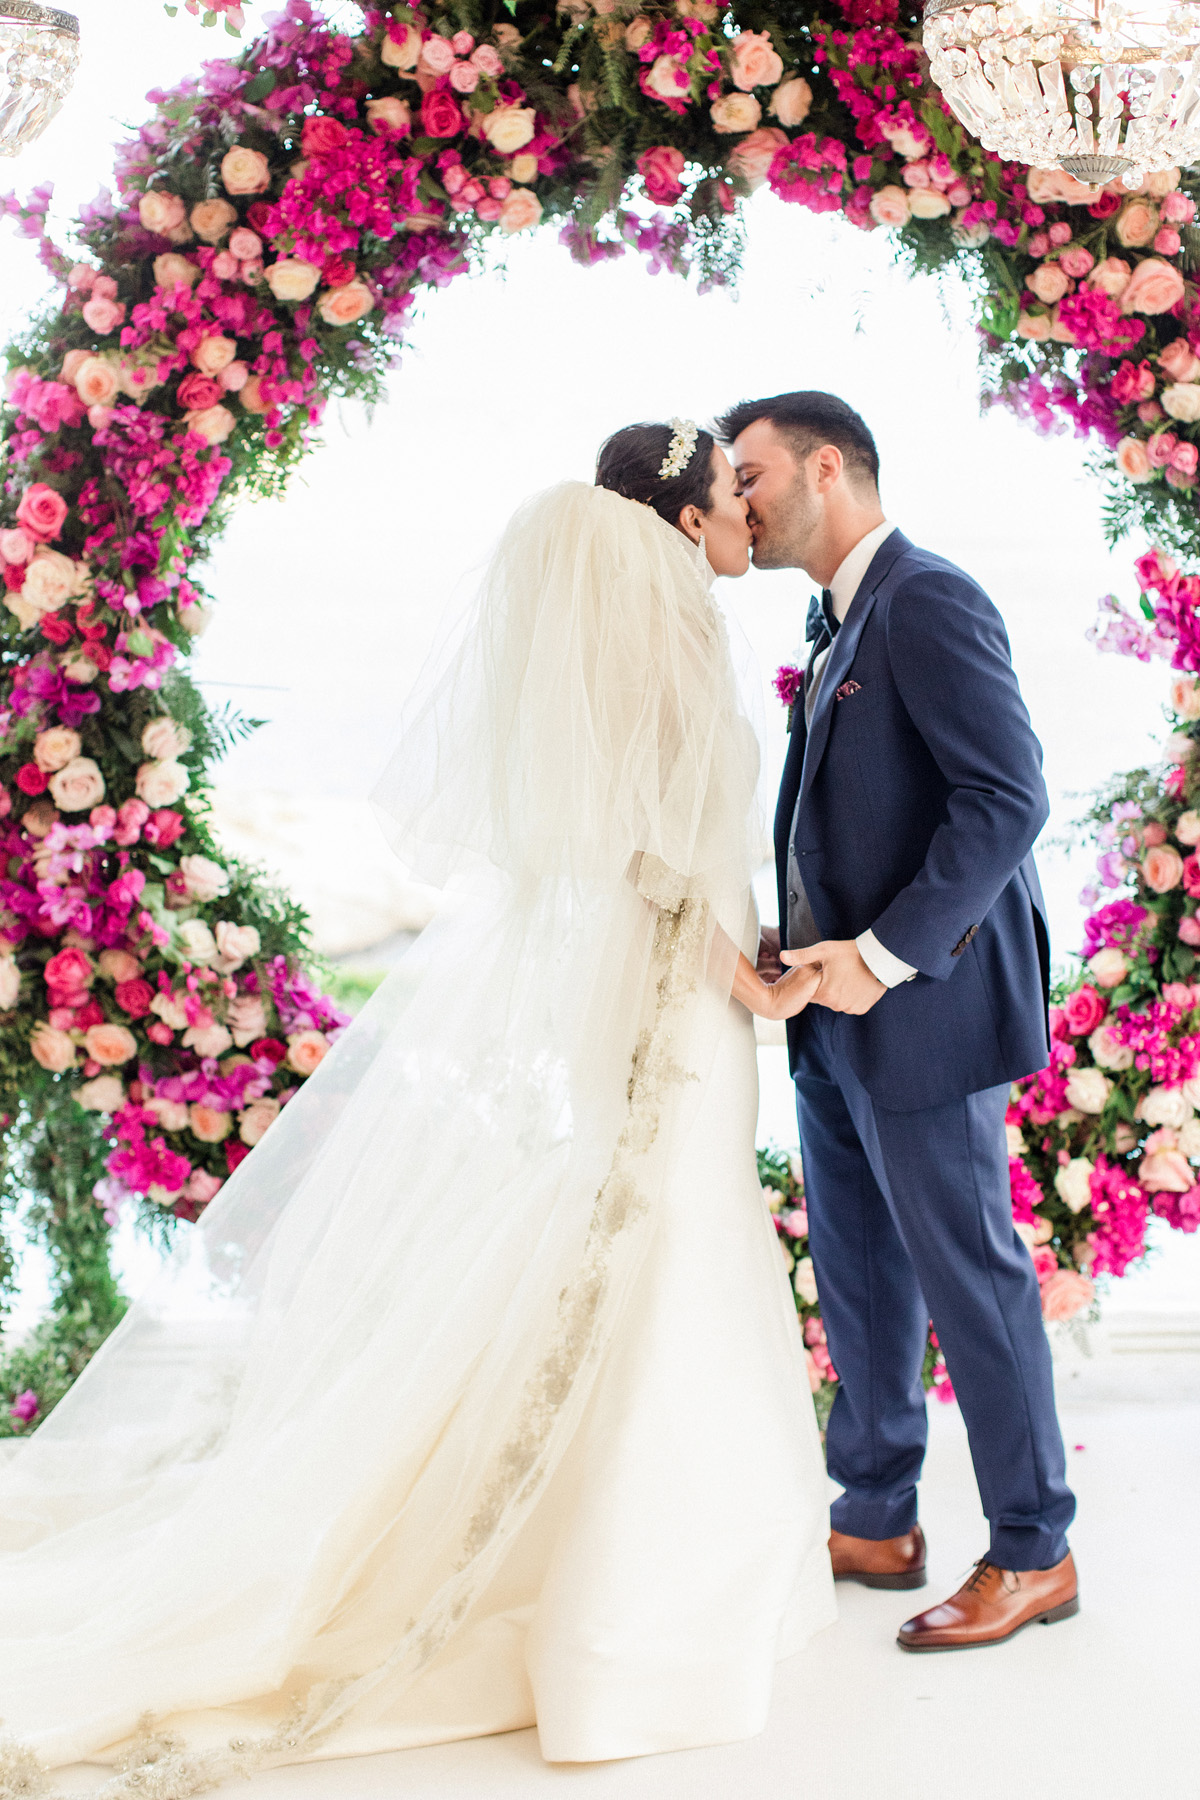 wedding kiss and pink giant wreath backdrop